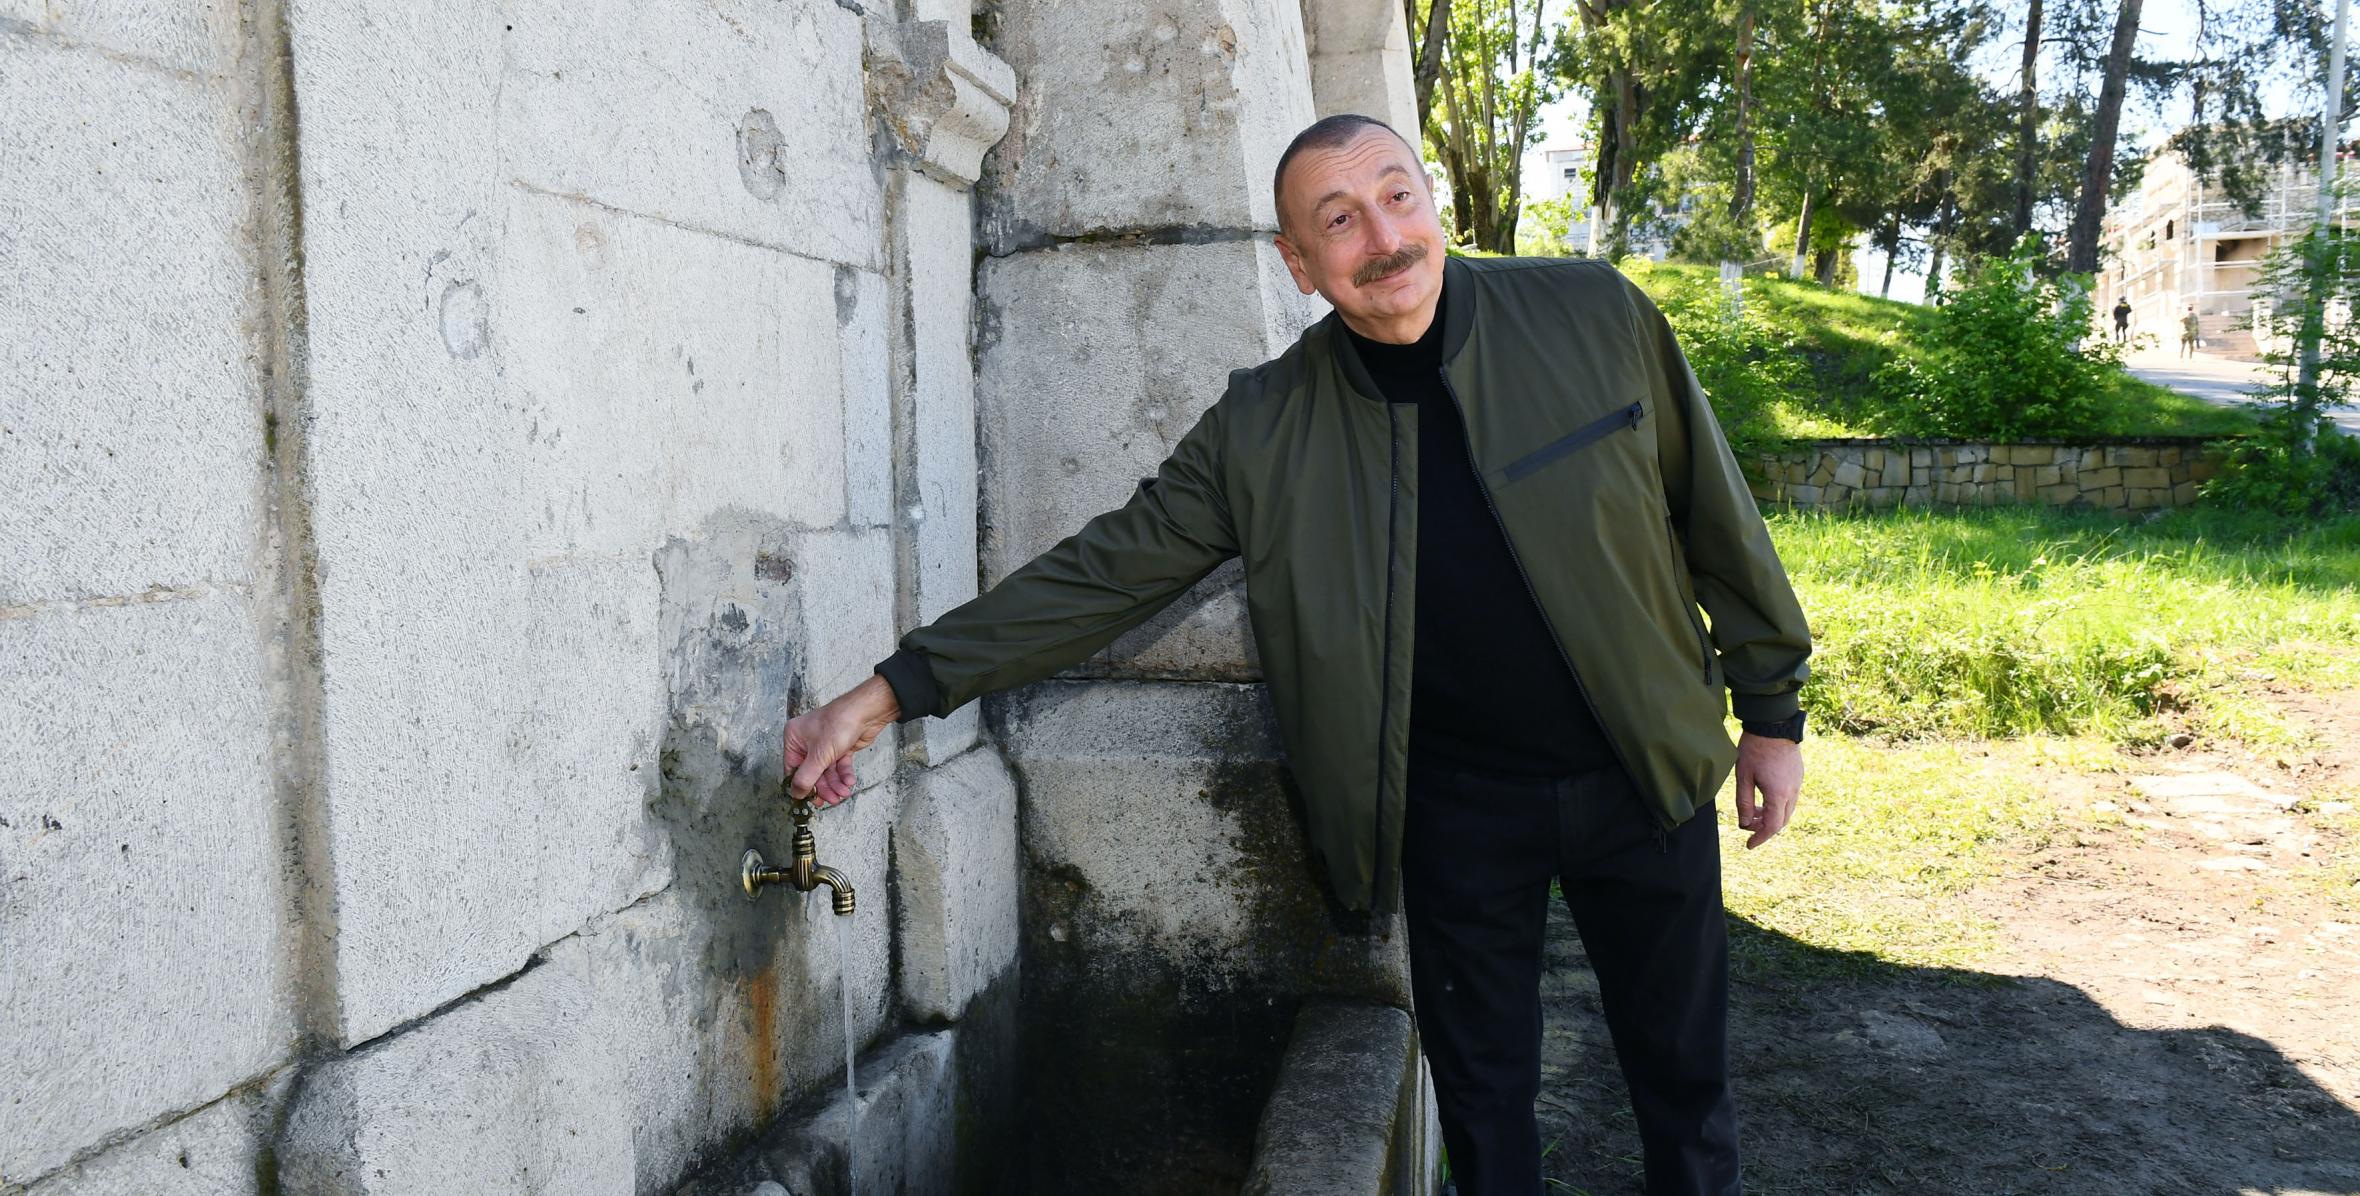 Ilham Aliyev visited the restored “Khan gizi” spring in Shusha